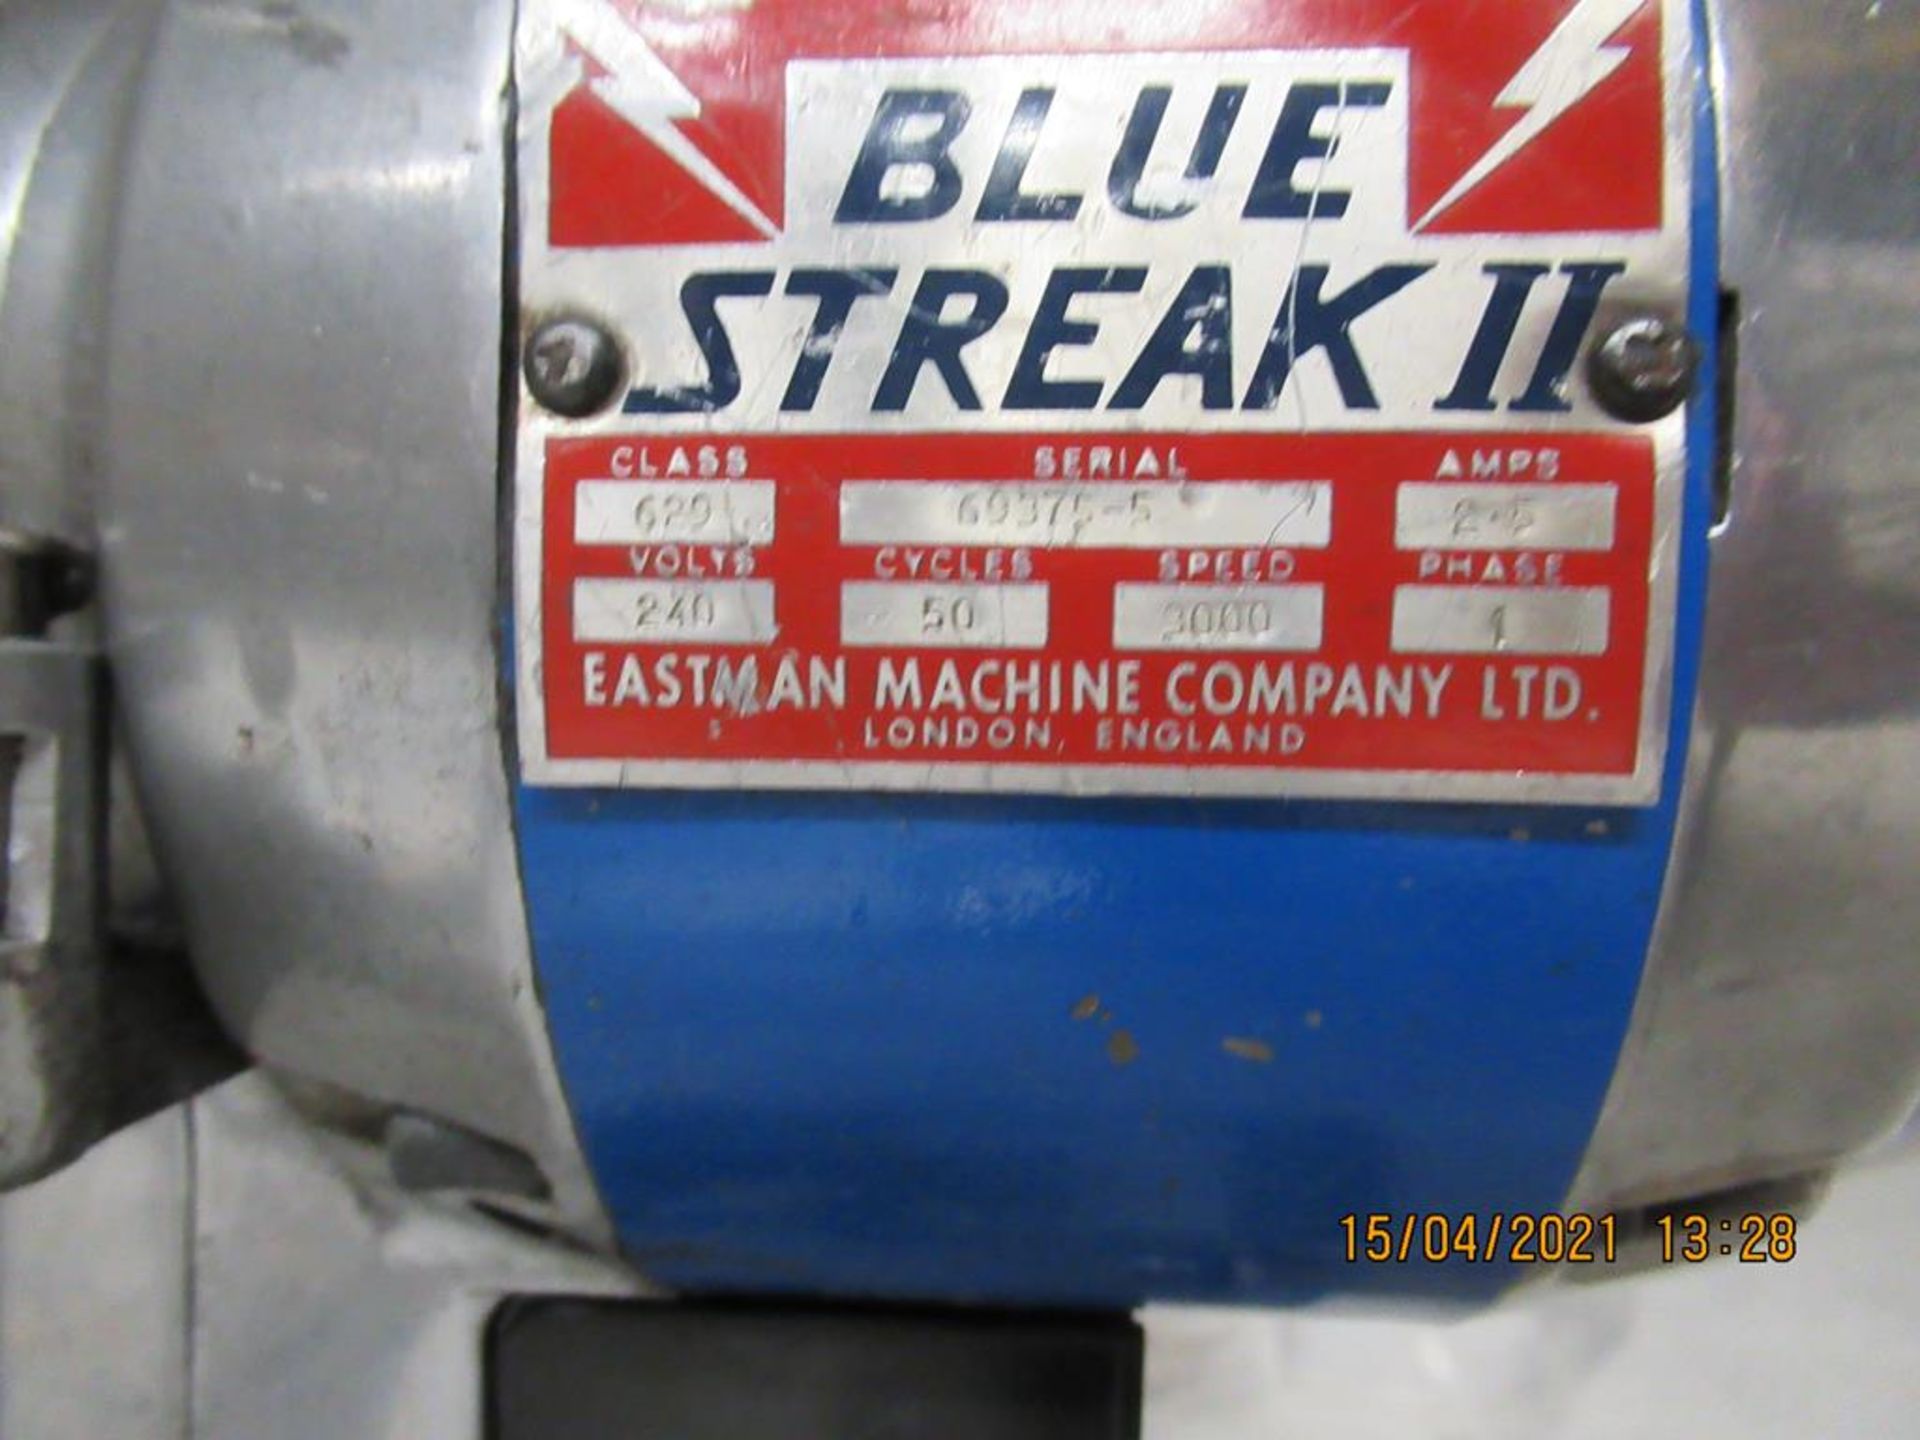 Eastman Blue Streak 2 Class 699 Straight Knife 10" Heavy Duty Cutting Machine - Image 4 of 5